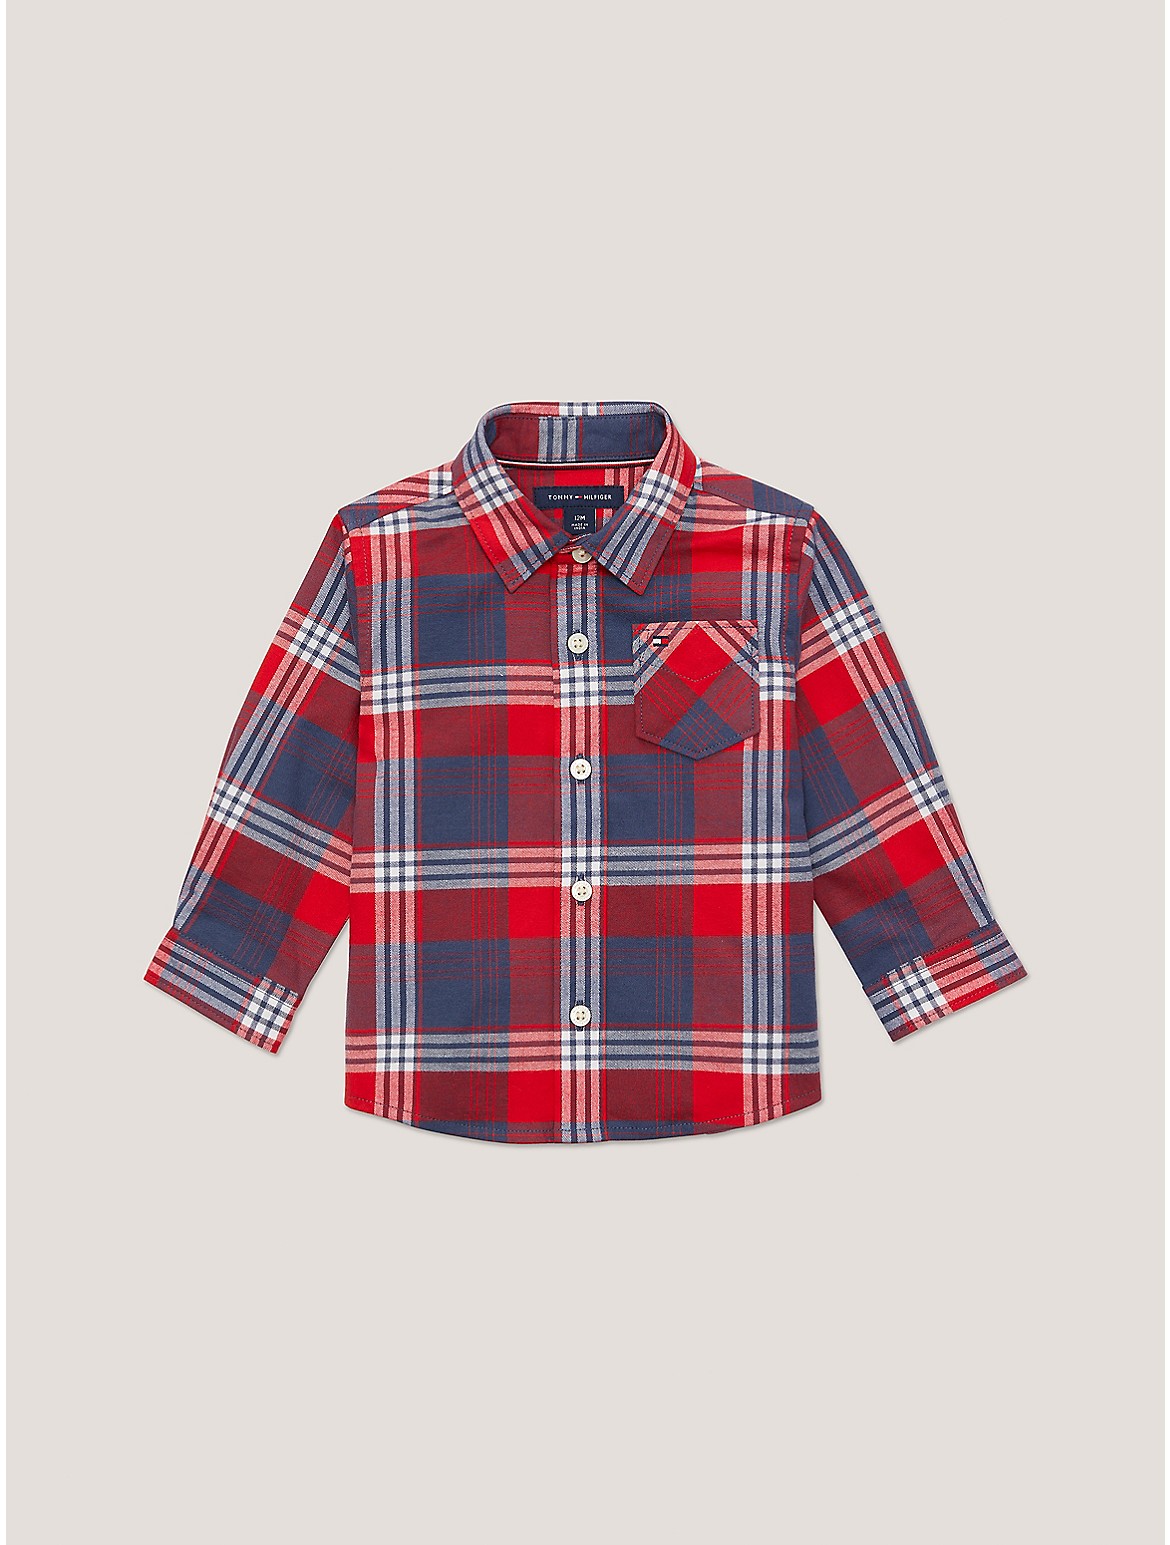 Tommy Hilfiger Boys' Babies' Plaid Shirt - Red - 12M